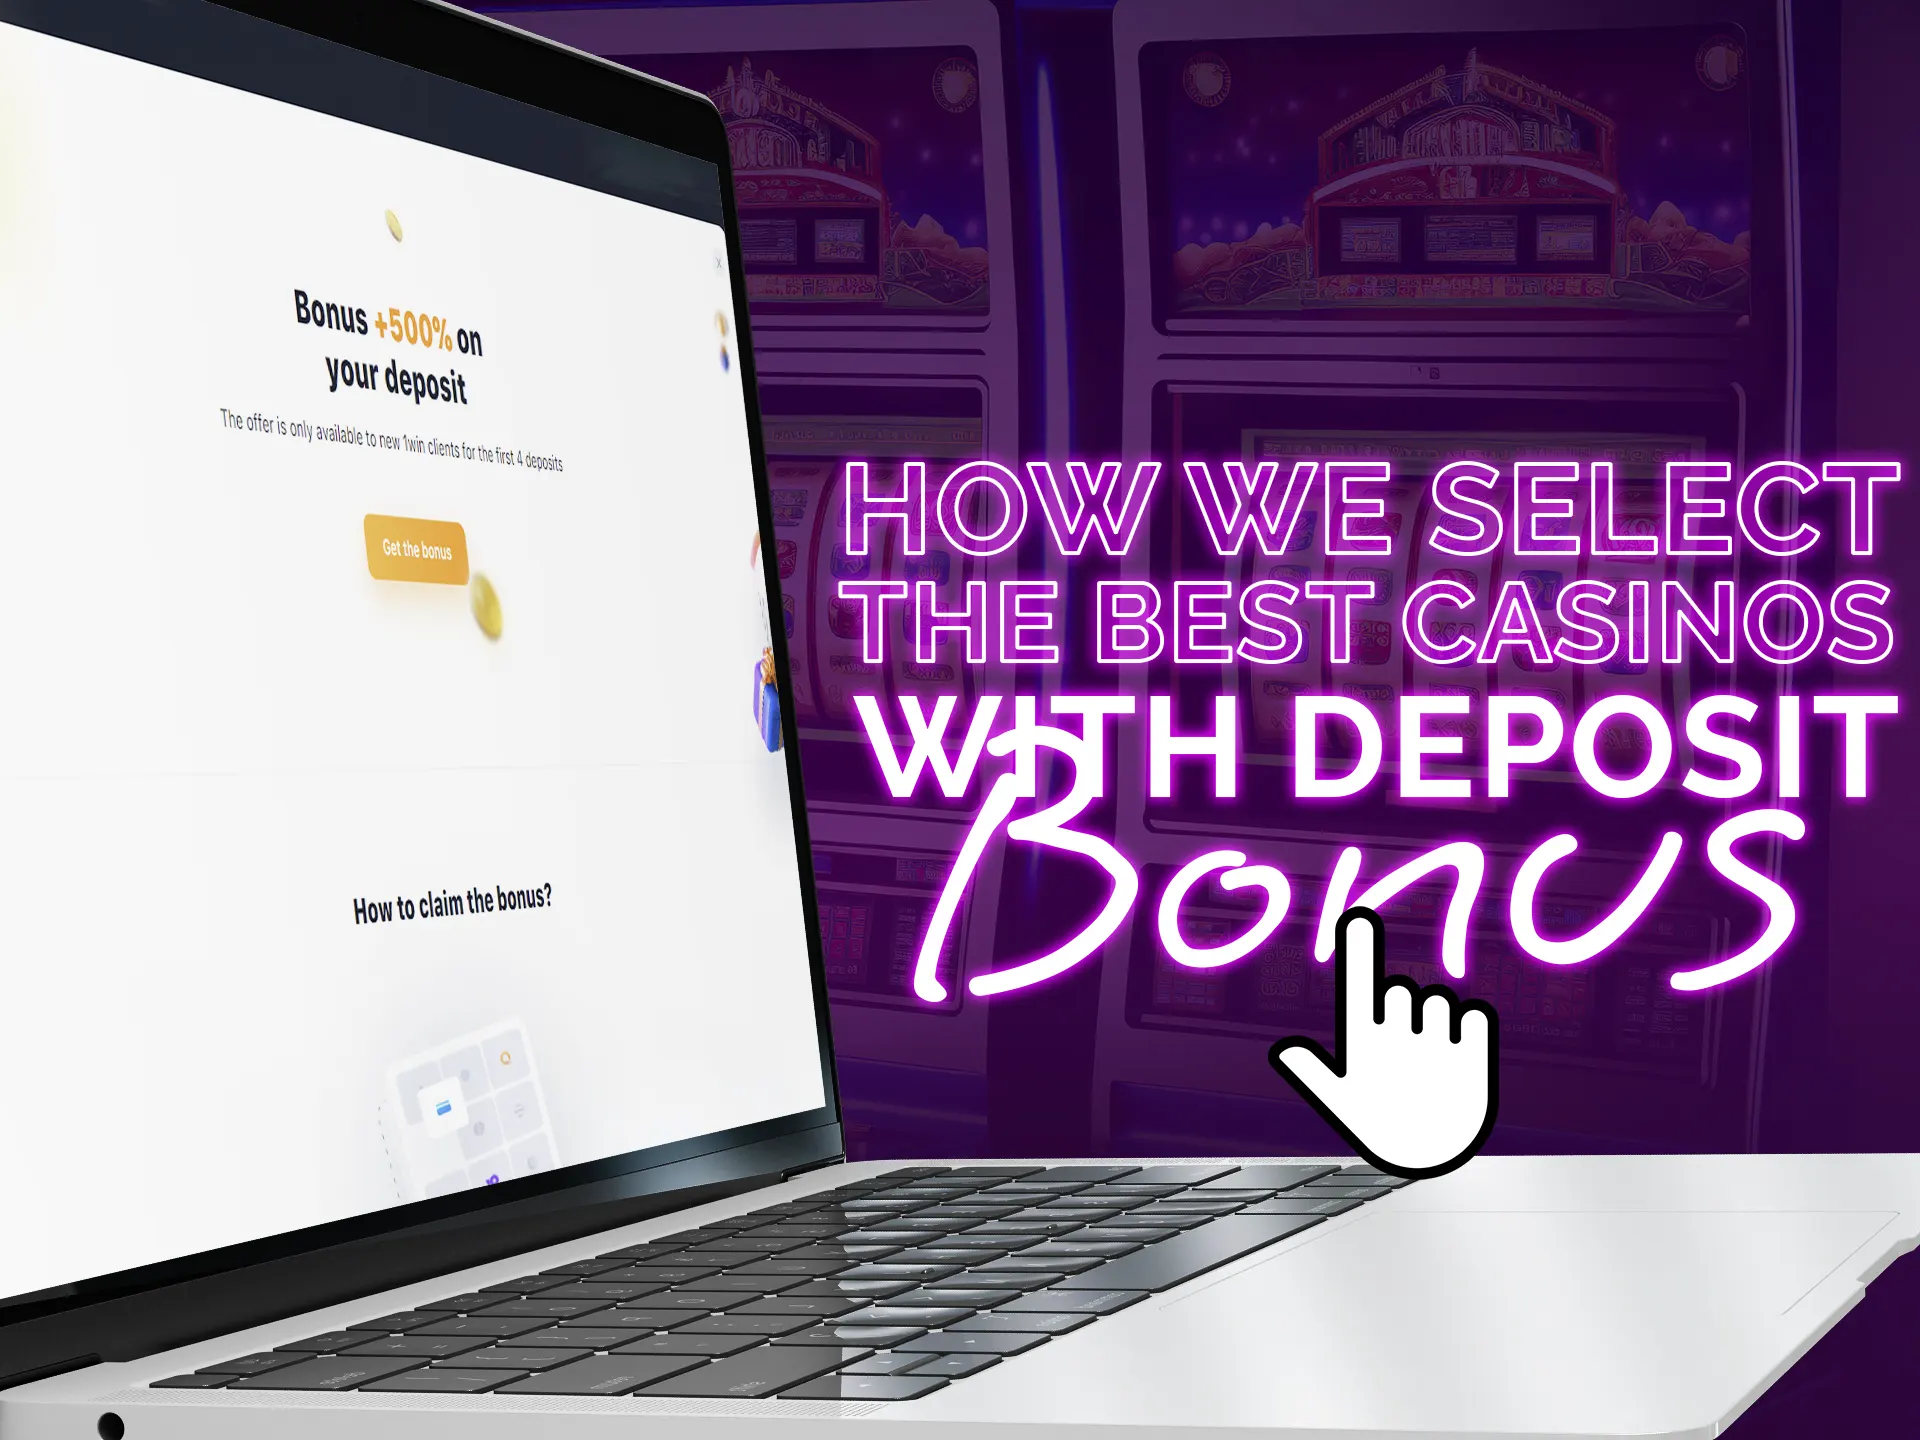 Learn how we selecting best casinos with deposit bonuses.